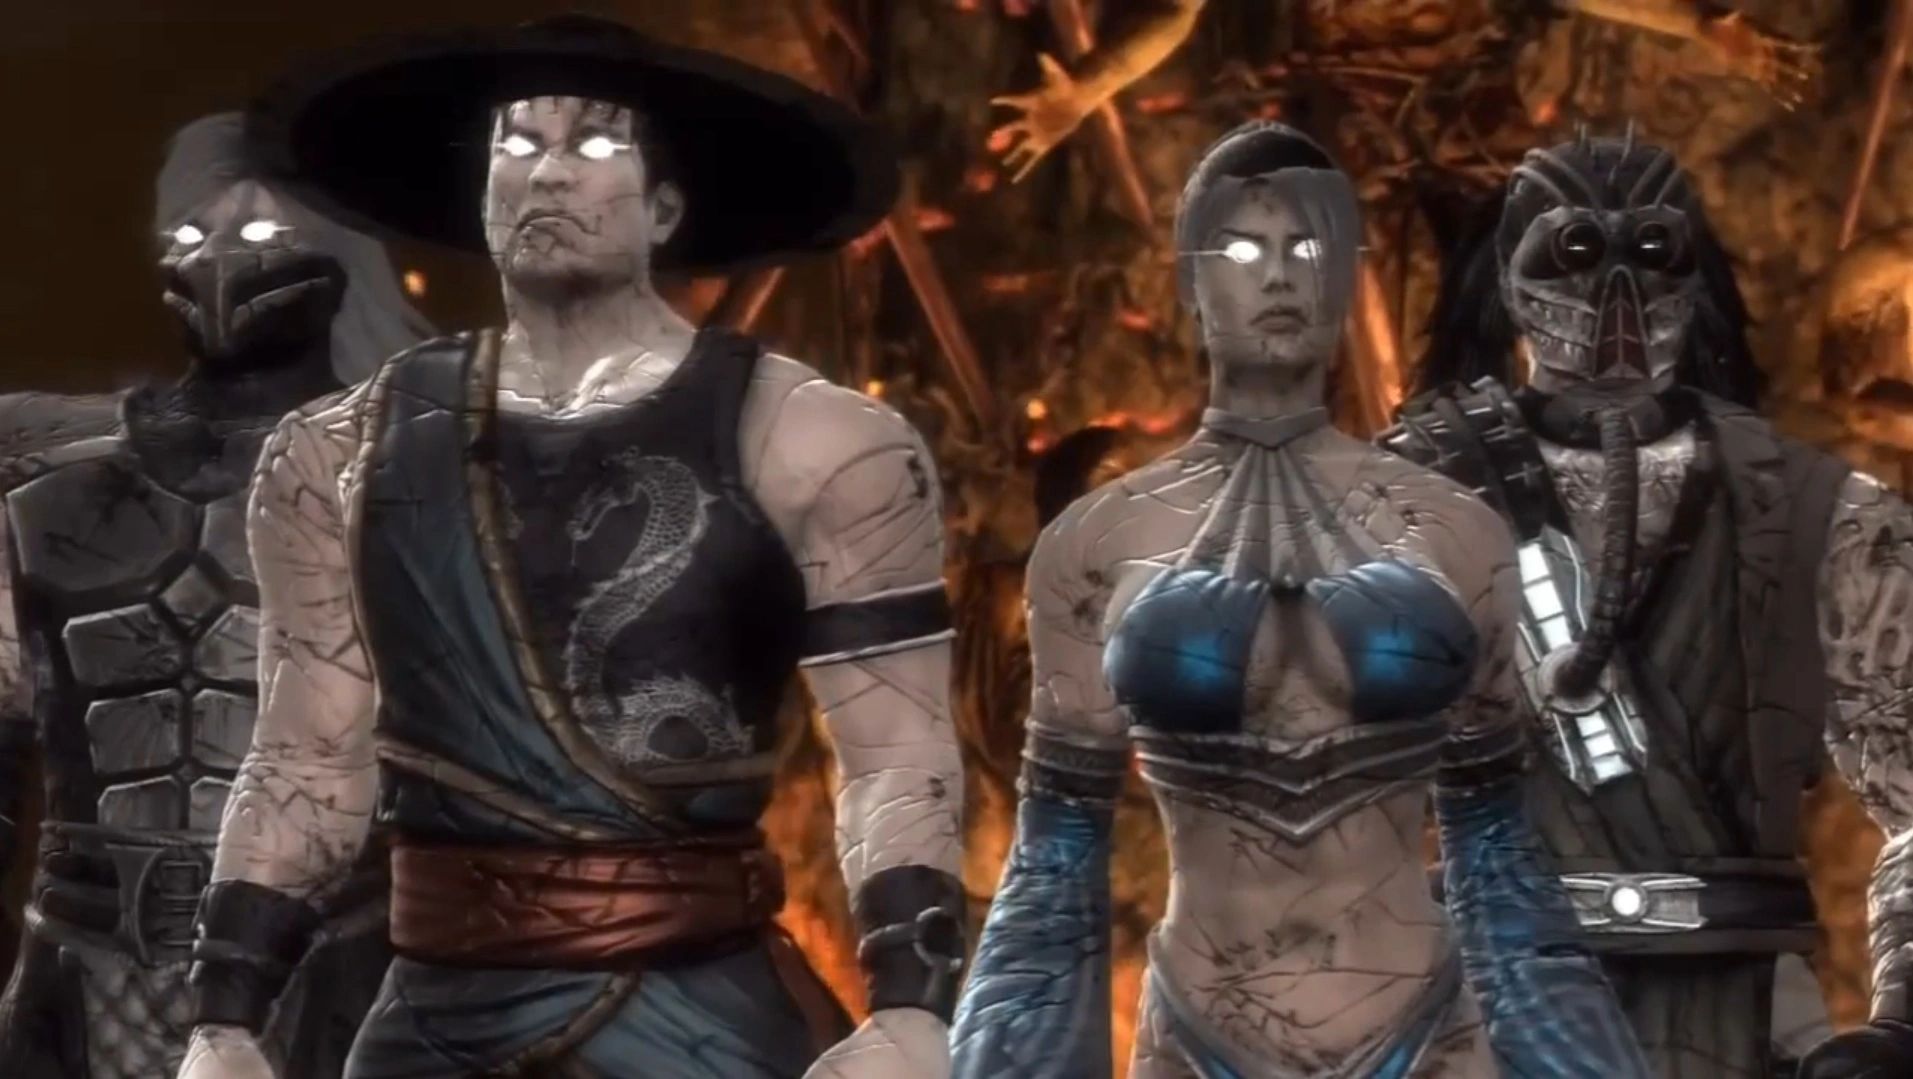 Смоук, Кун Лао, Китана и Кабал на стороне тьмы. Источник: Mortal Kombat X